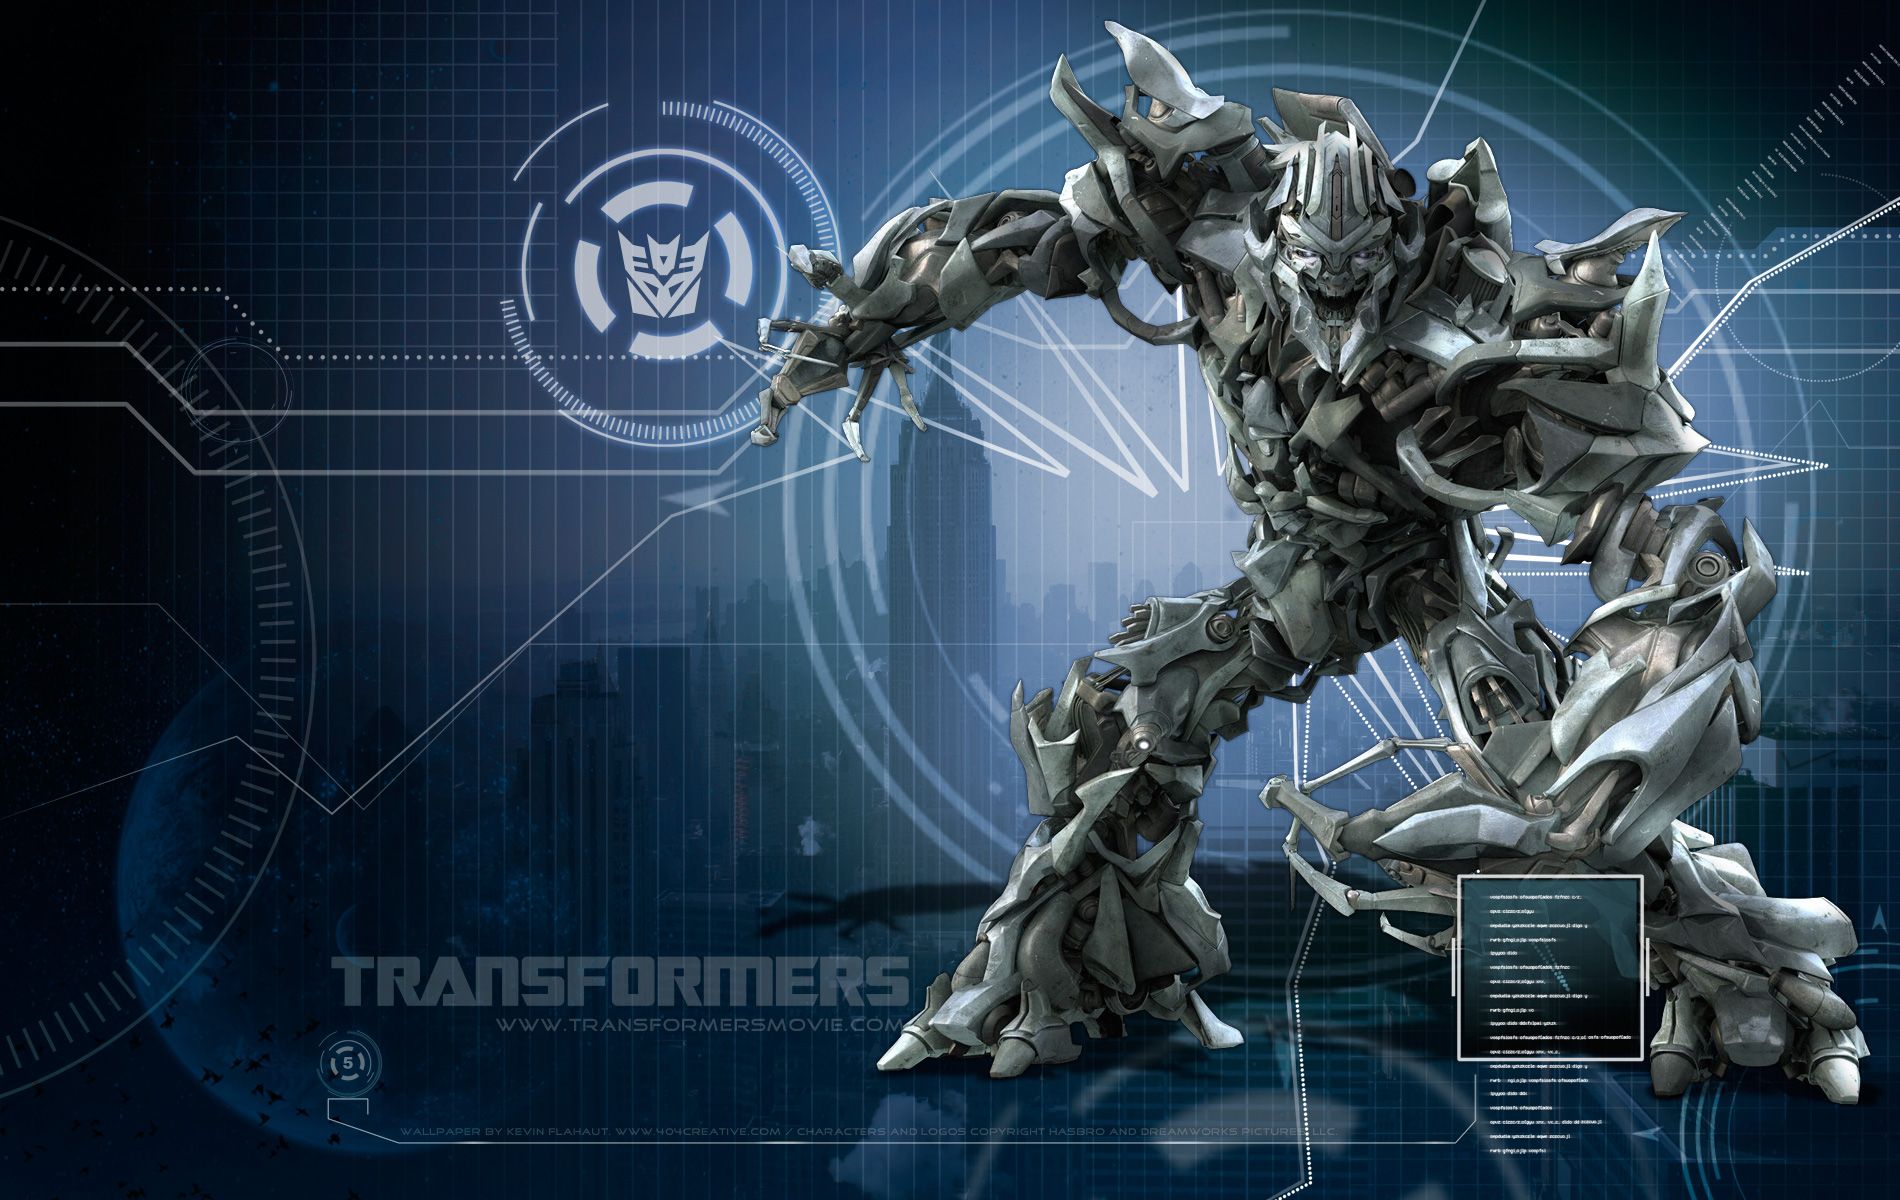 Download Transformers Movie Wallpaper 404 Creative Studios